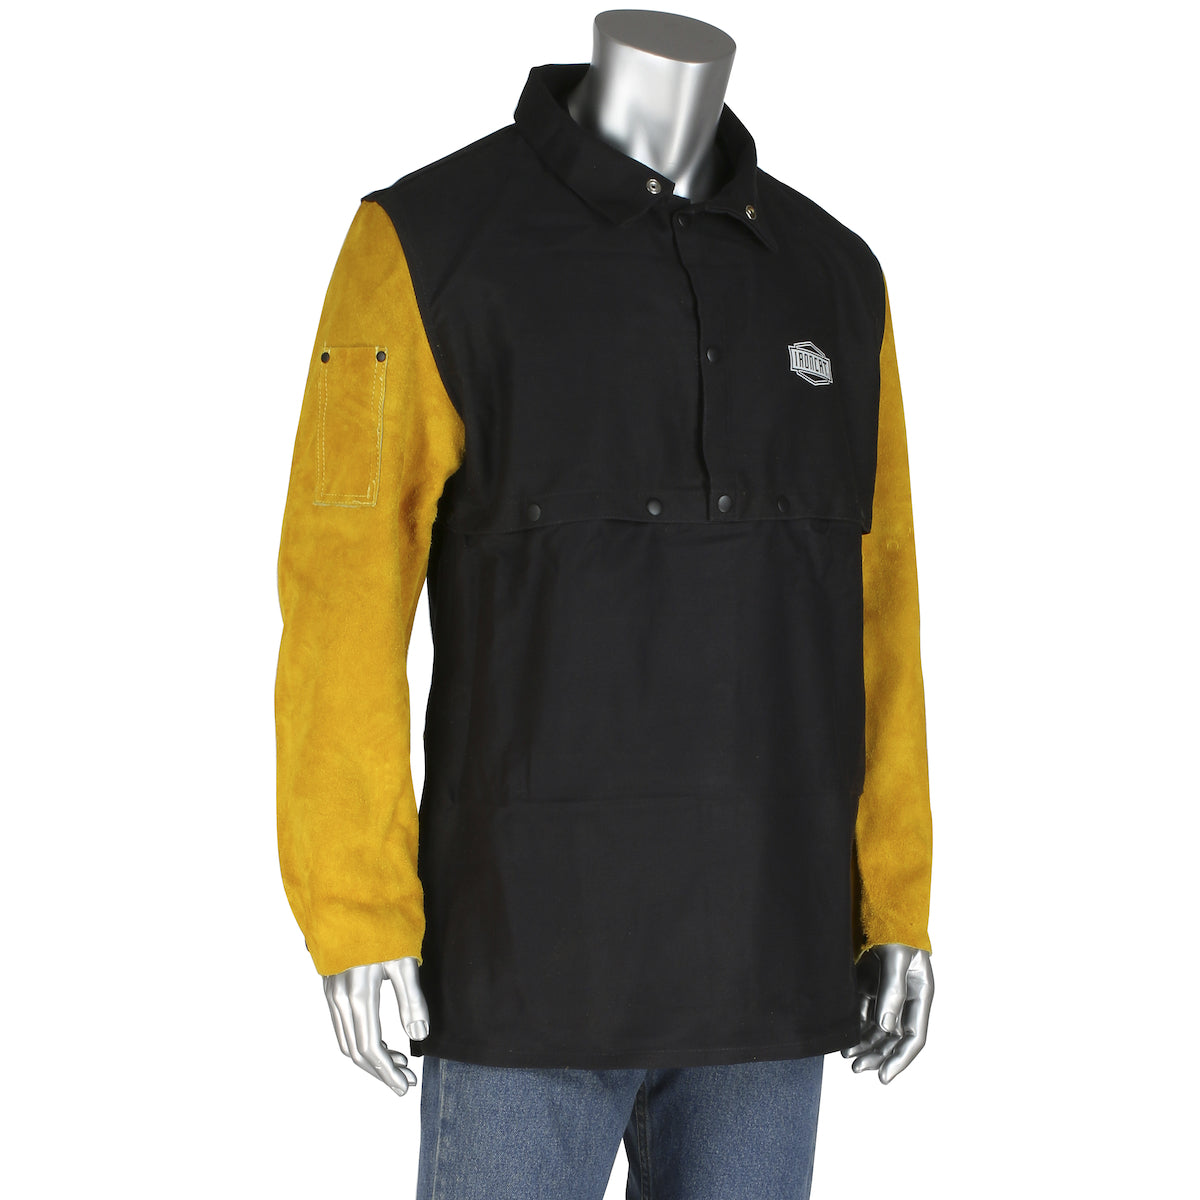 Ironcat 8051/4XL Combination FR Cotton / Leather Cape Sleeve with Apron